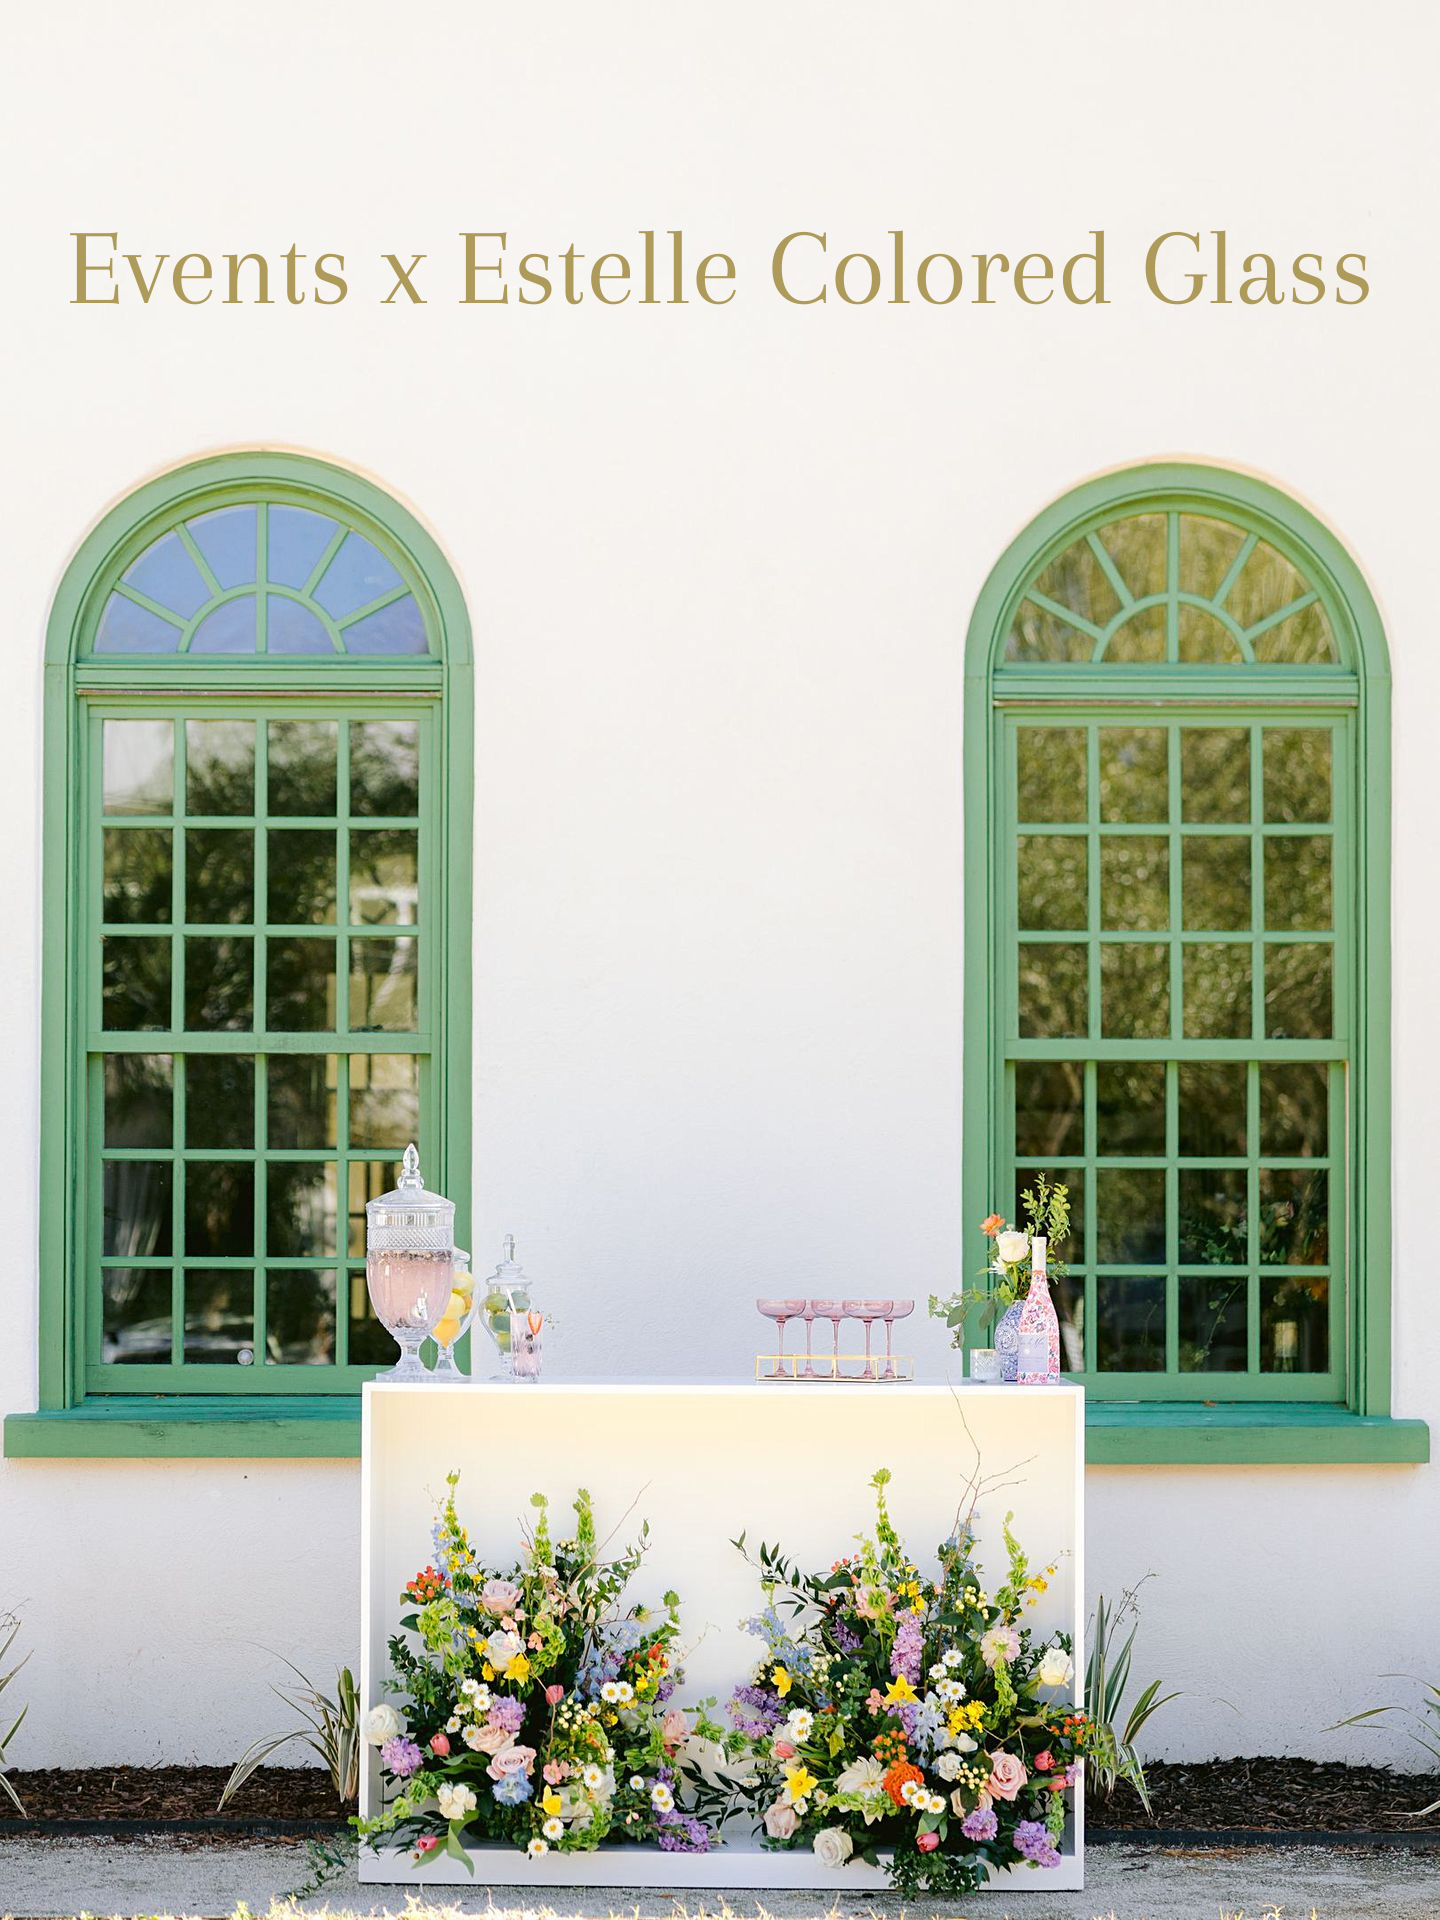 Events x Estelle Colored Glass